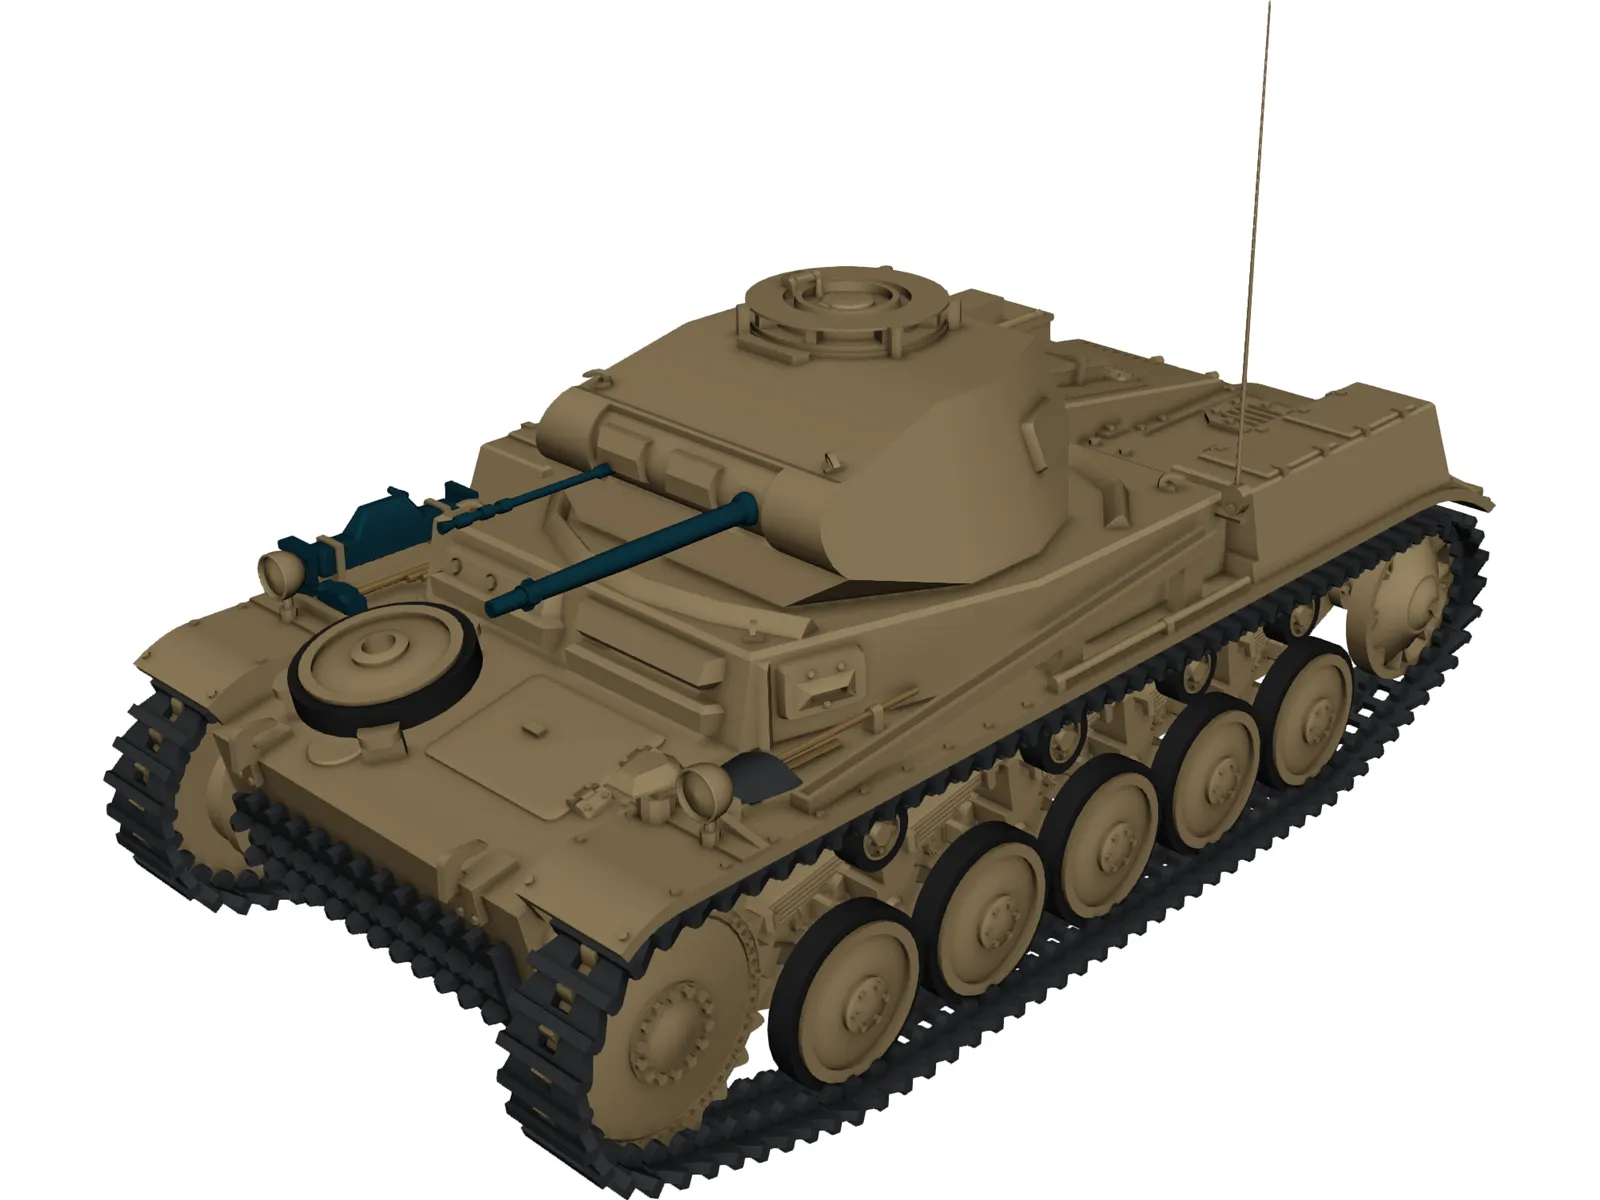 Panzer II 3D Model